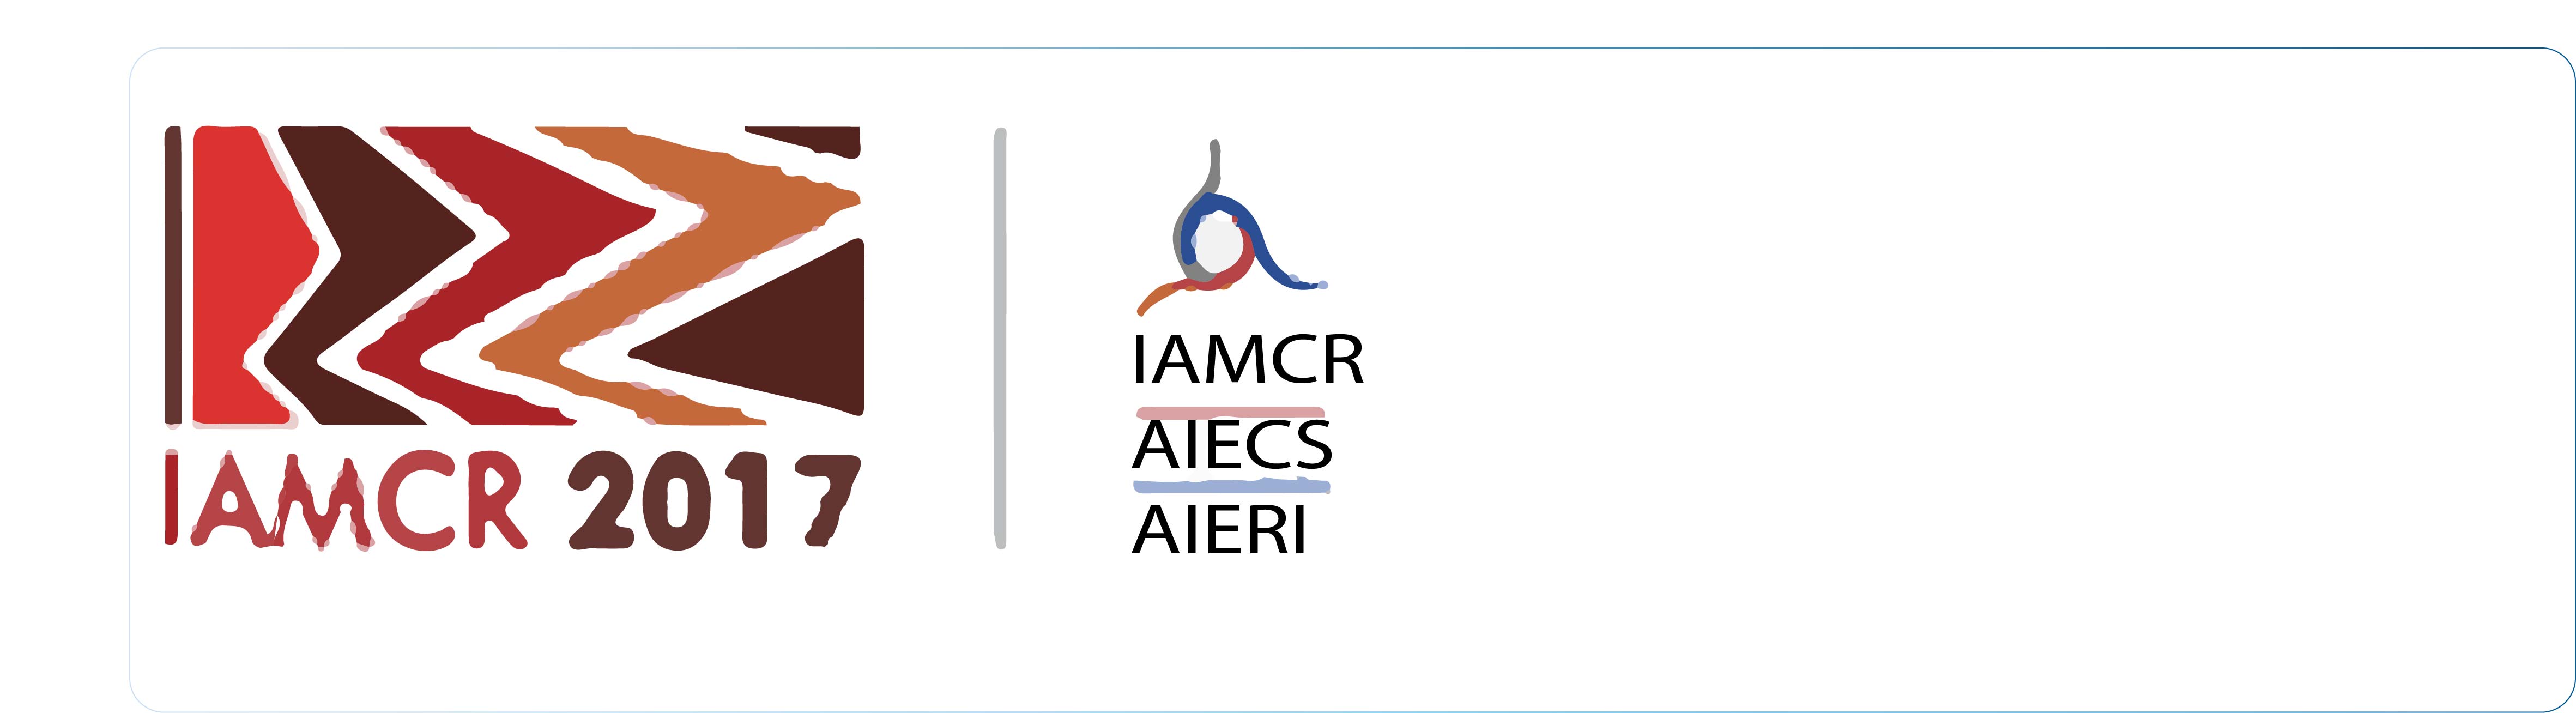 banner IAMCR